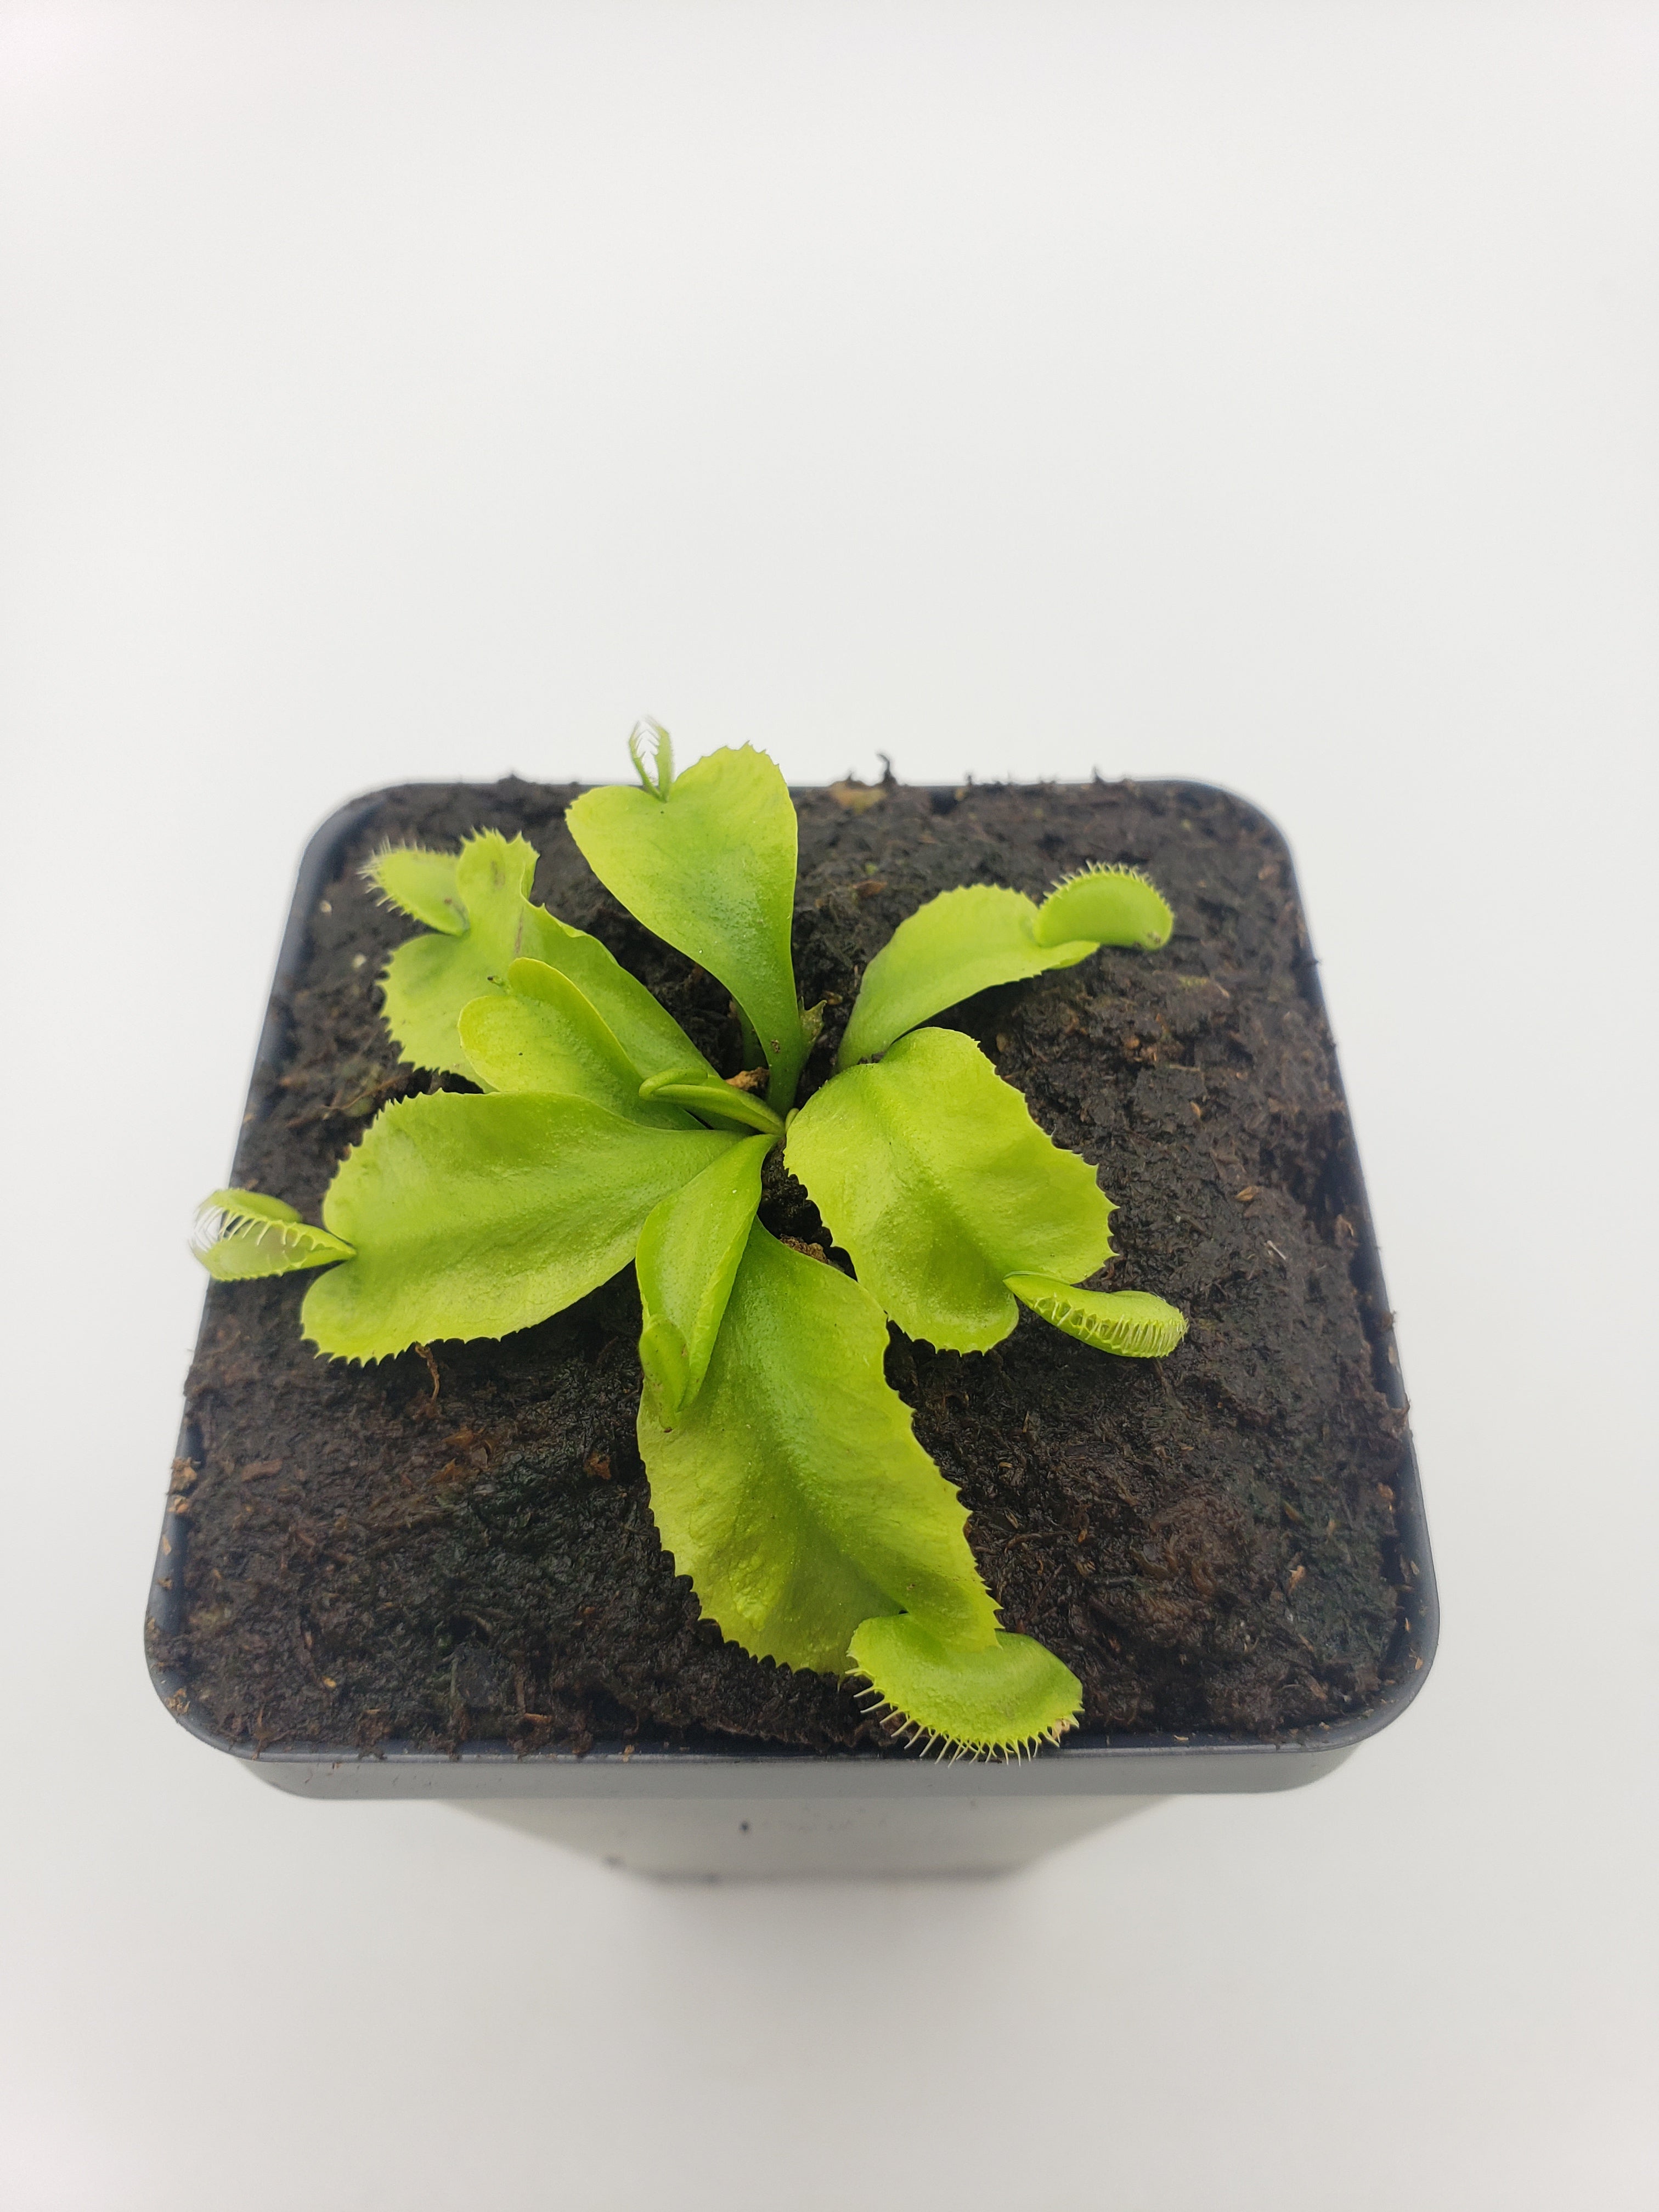 Venus flytrap (Dionaea muscipula) 'Alien' - Rainbow Carnivorous Plants LLC